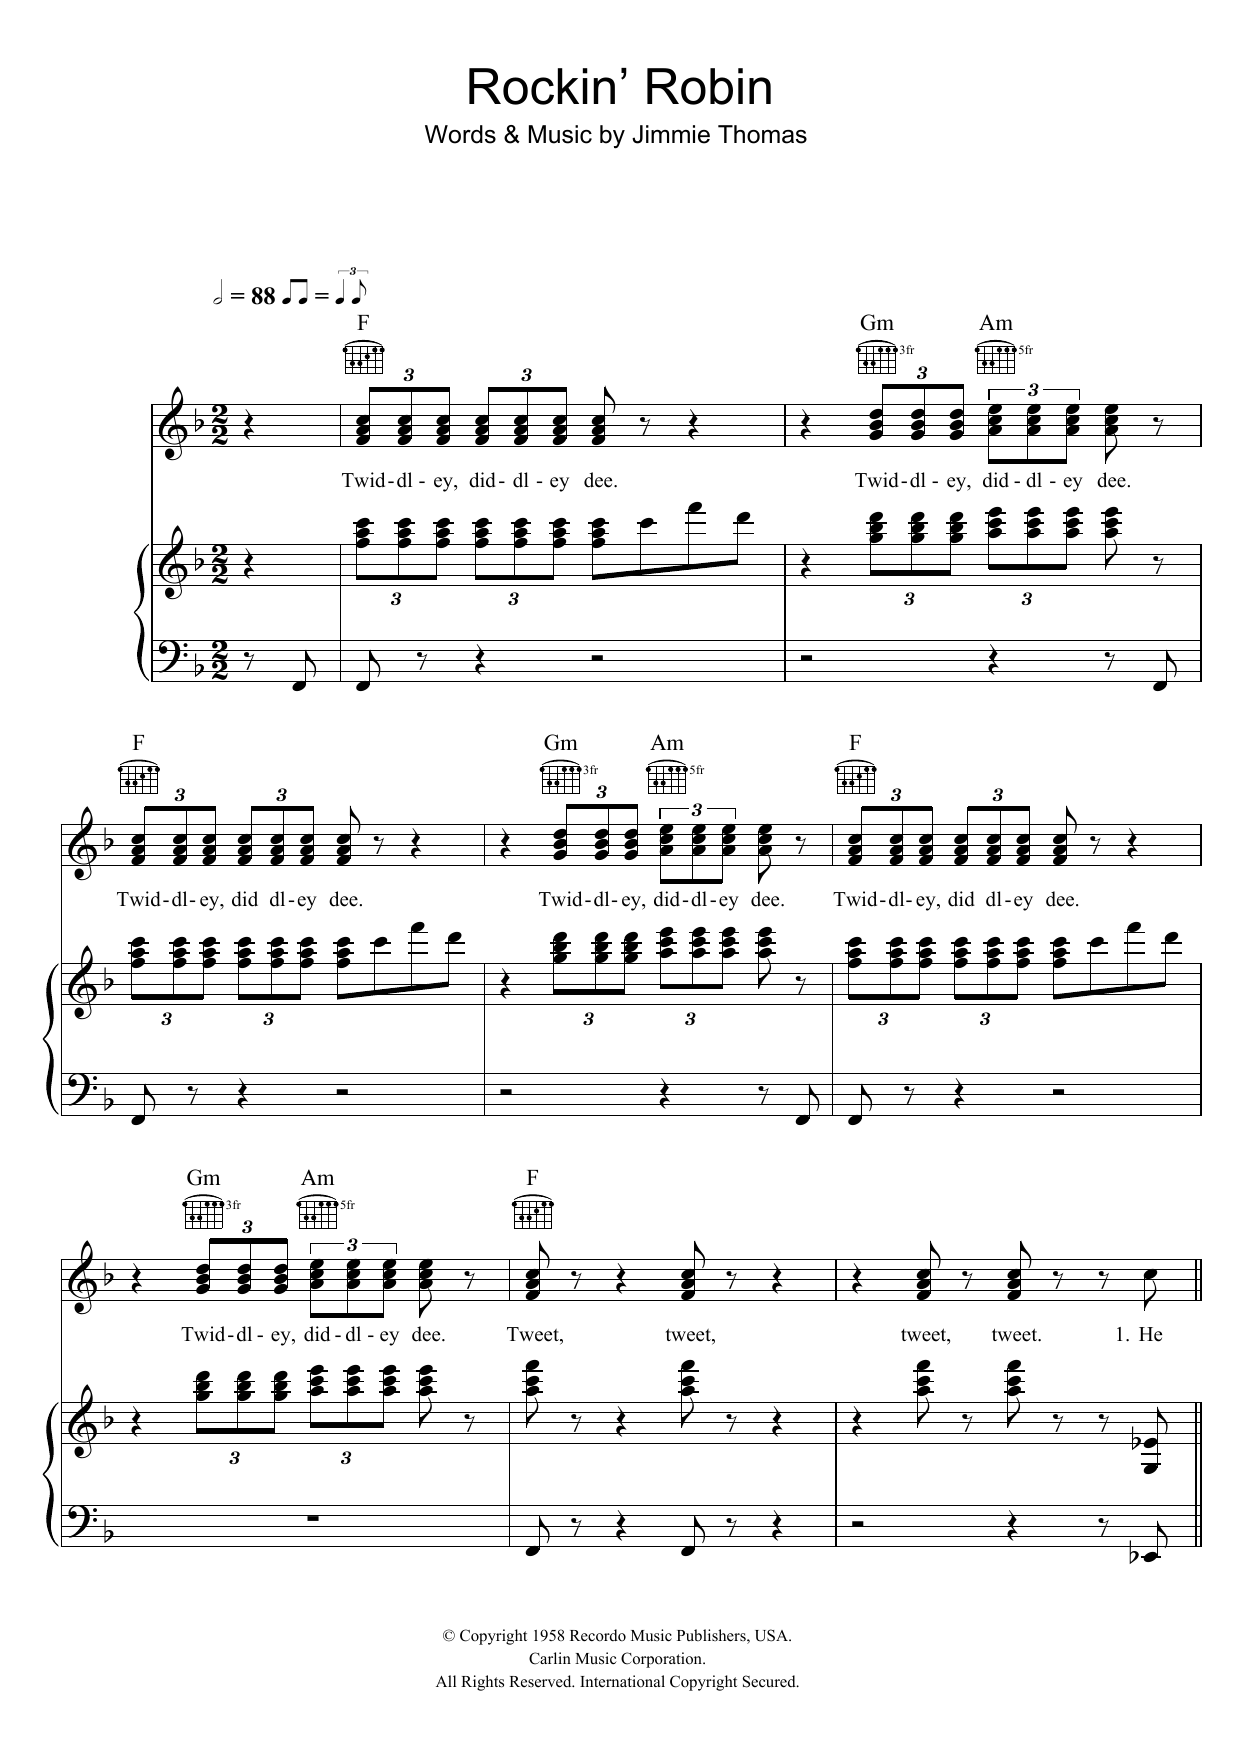 J. Thomas Rockin' Robin Sheet Music Notes & Chords for Clarinet - Download or Print PDF